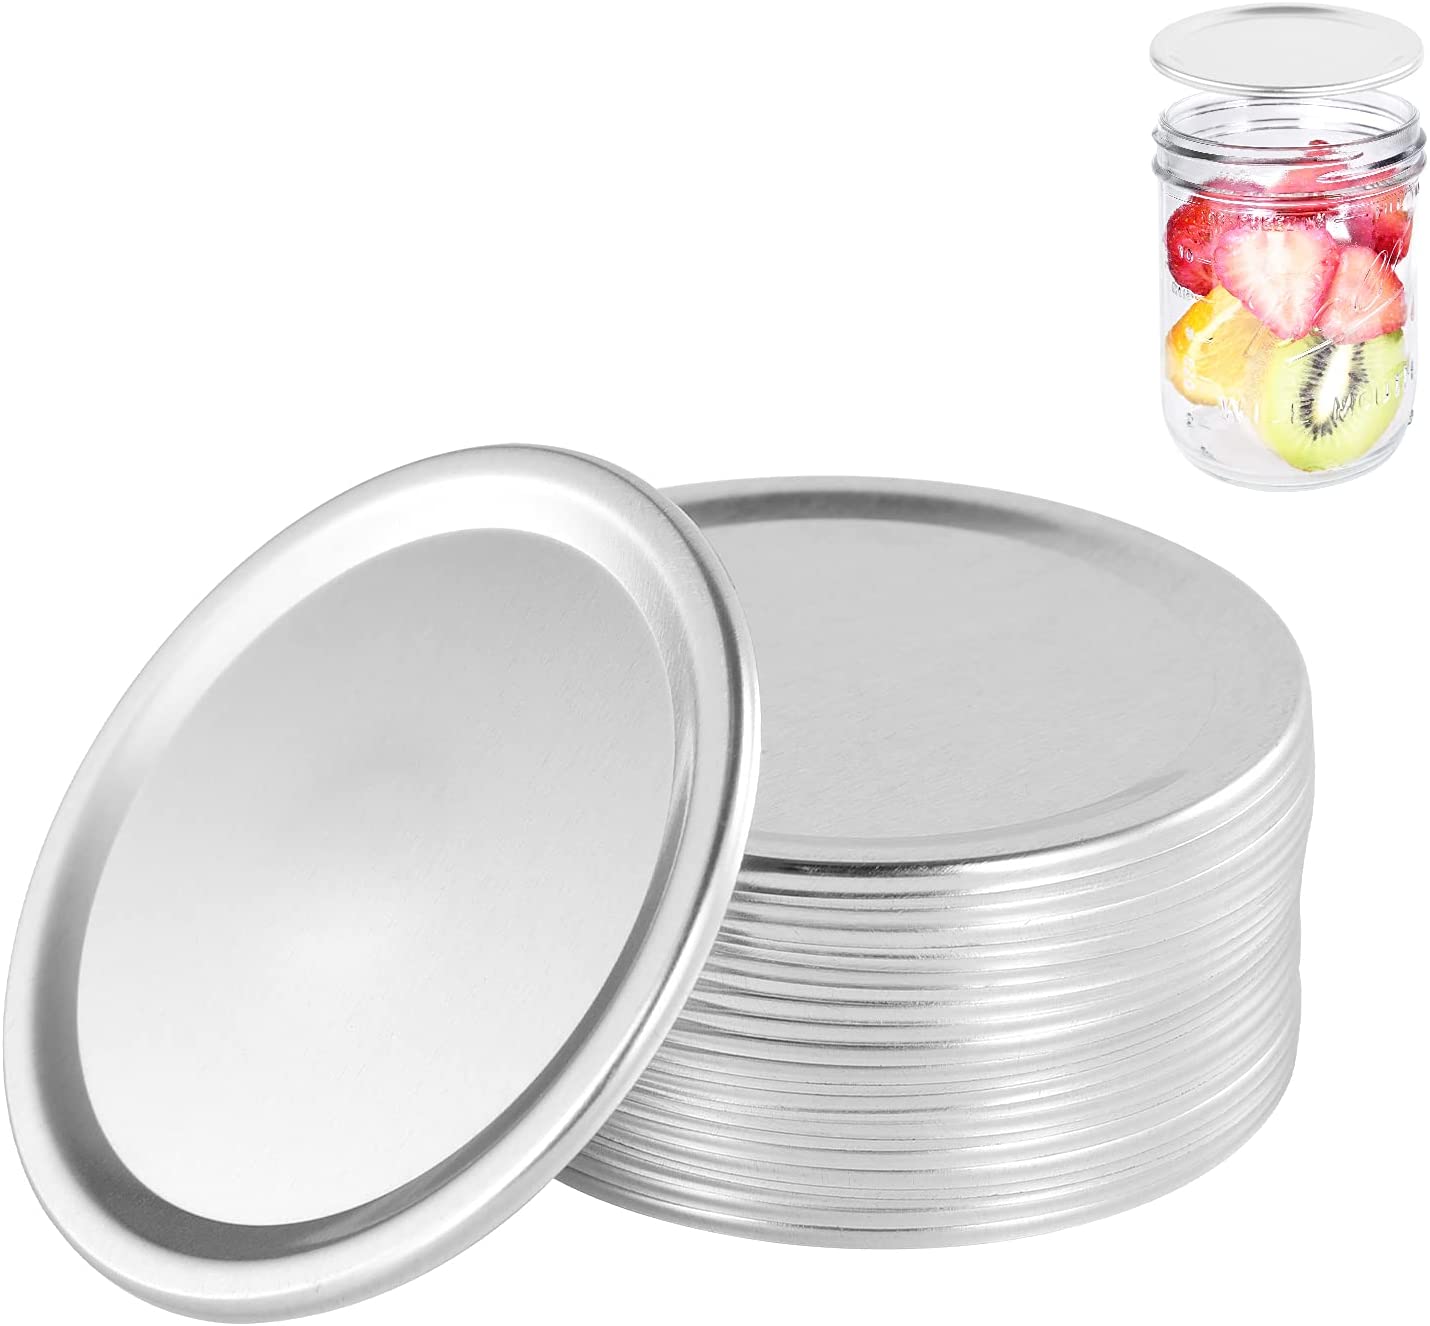 Aluminum Regular Mouth Mason Canning Lids for Jars Featured Image